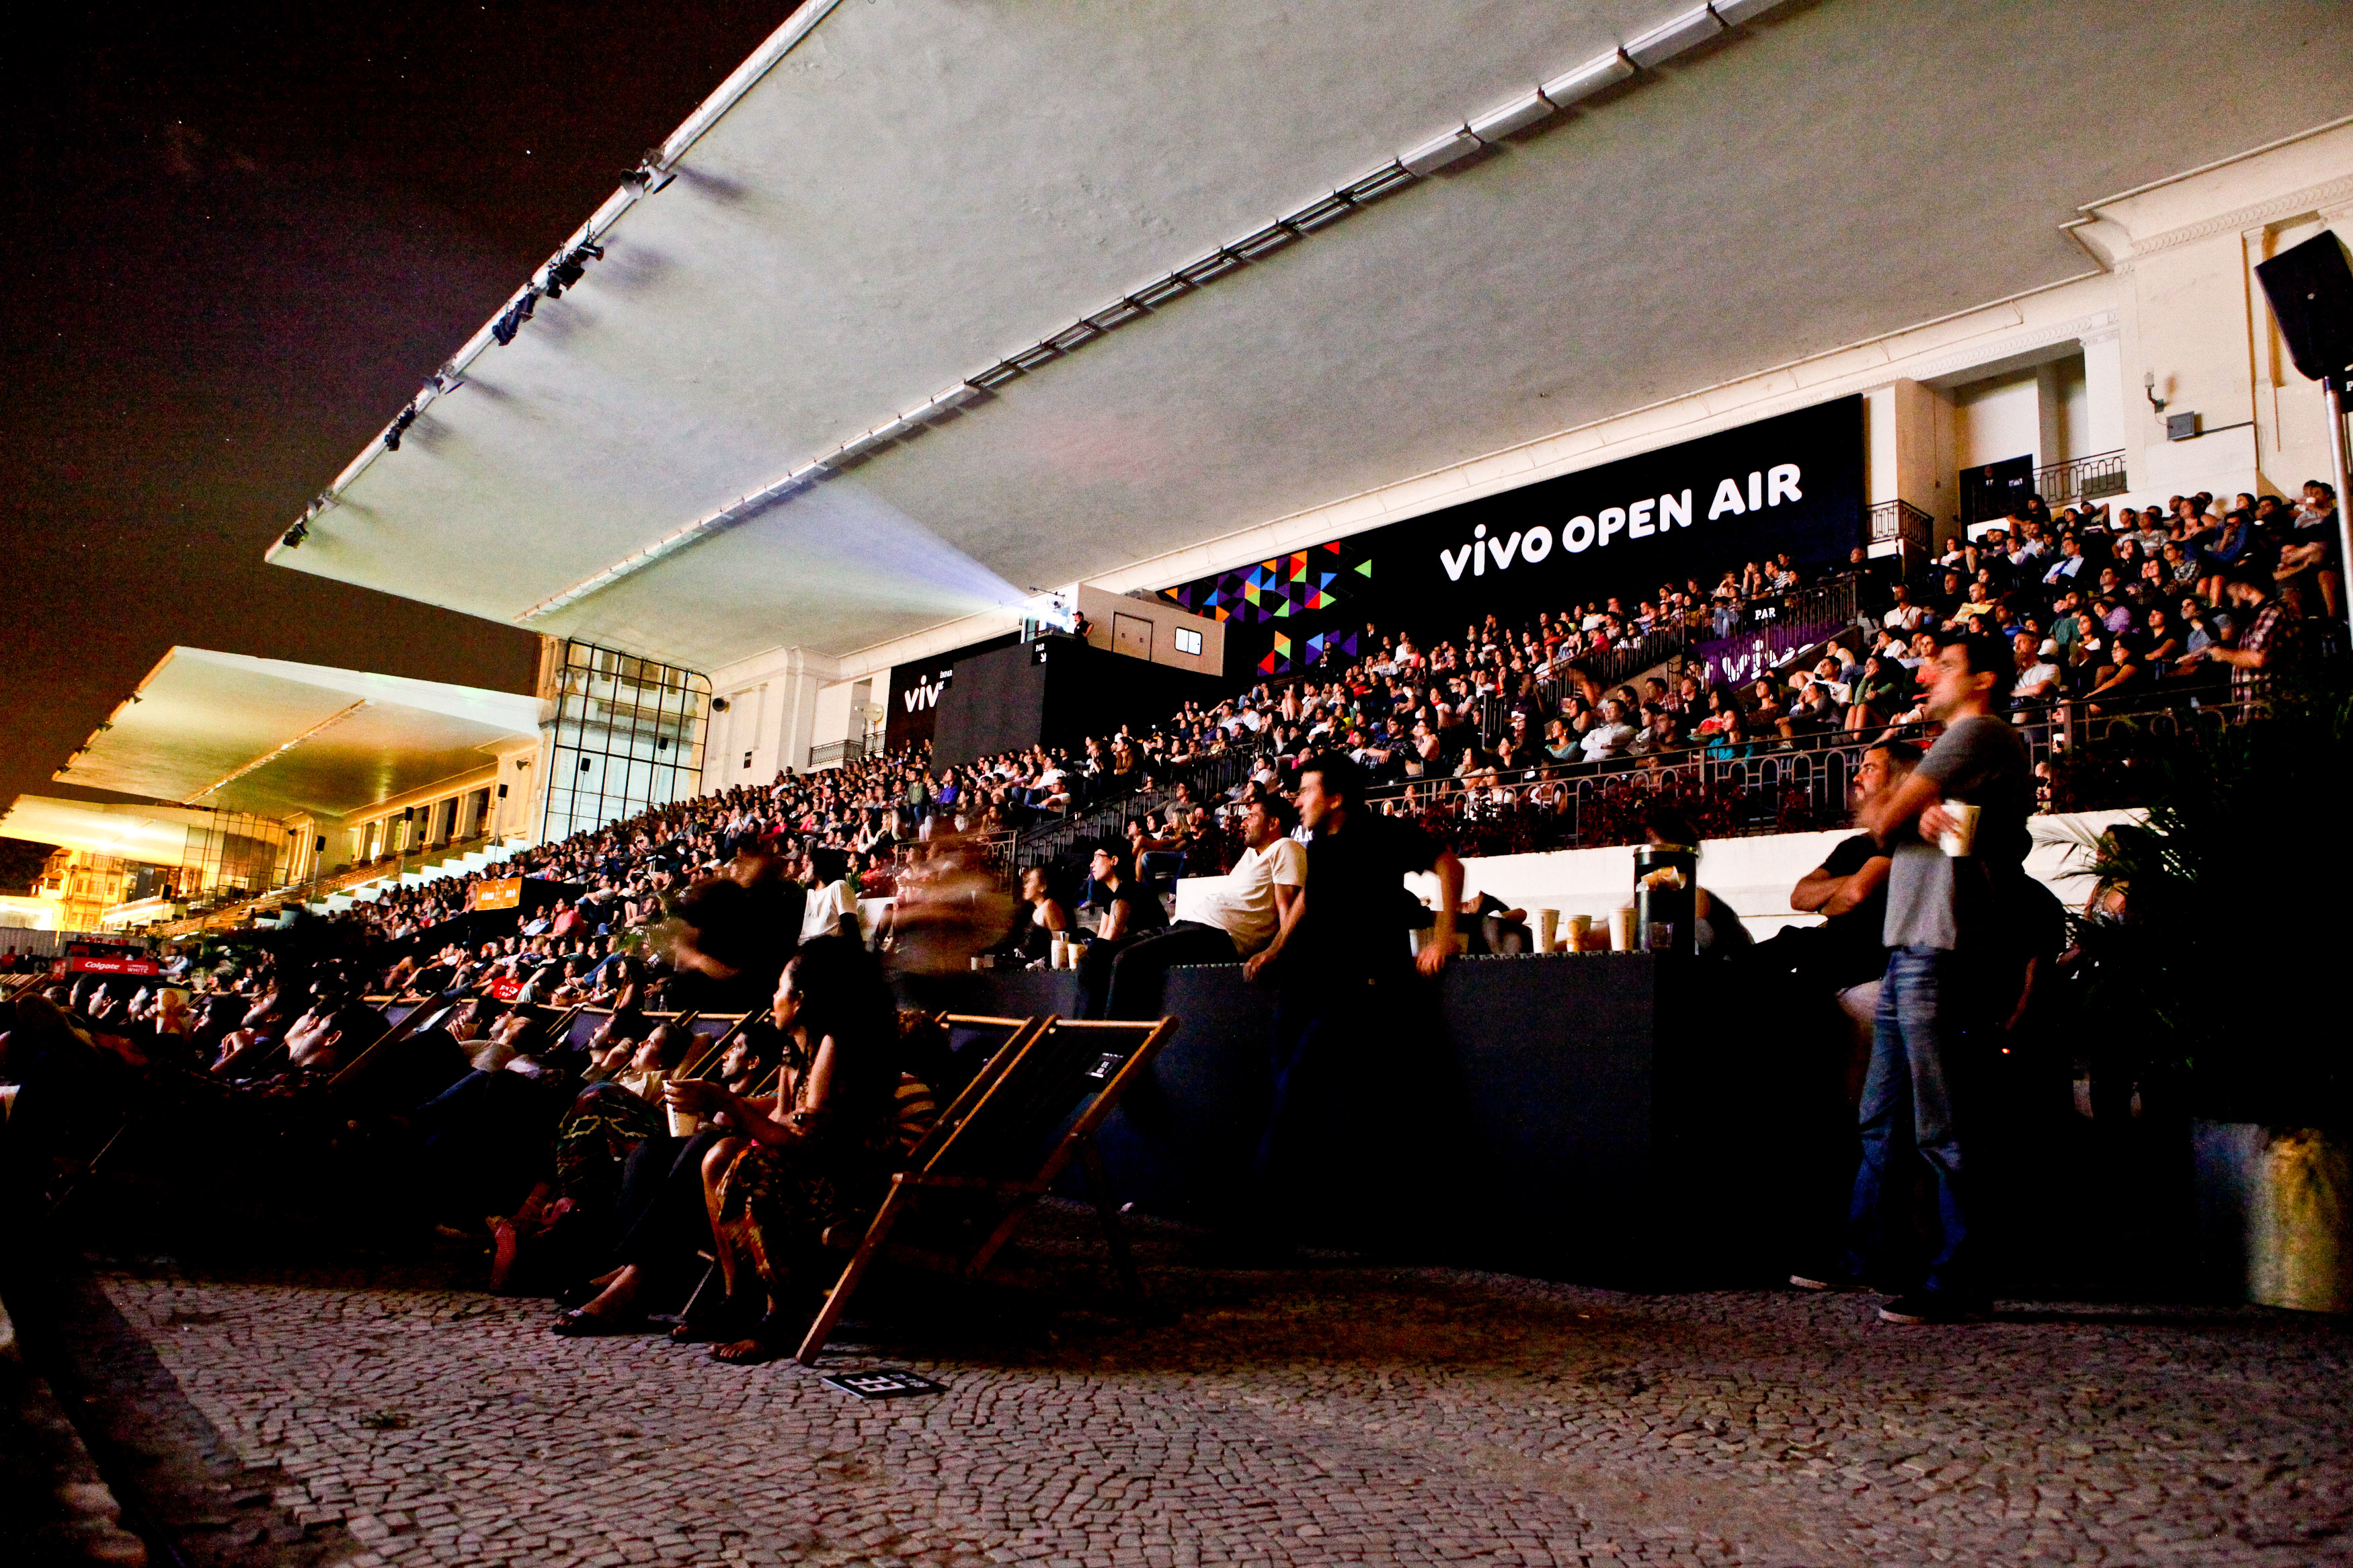 Vivo Open Air 2014, Rio de Janeiro, Brazil News, Brazil, Vivo Open Air 2014, Outdoor Movie Screenings in Rio, Marina da Glória, The Jesus and Mary Chain,